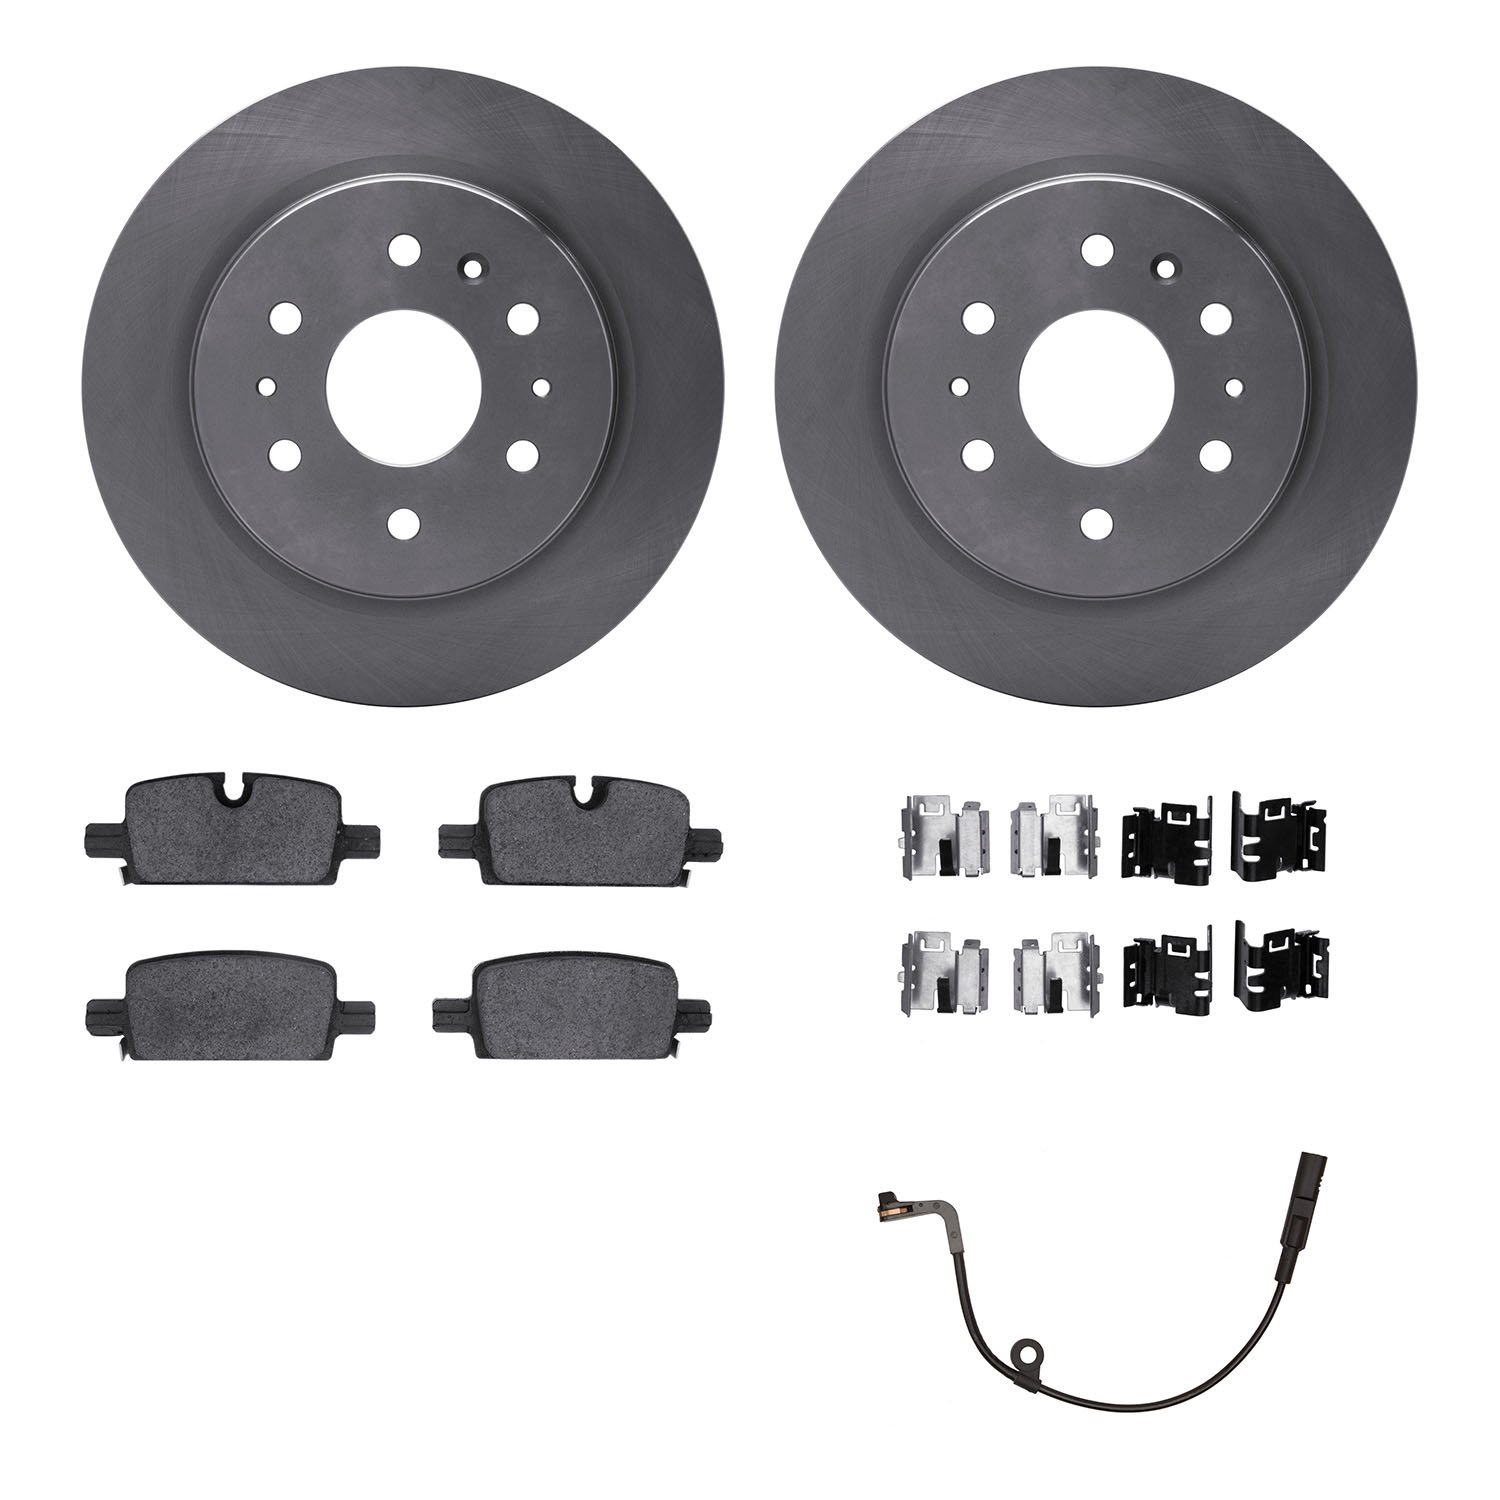 6422-47004 Brake Rotors with Ultimate-Duty Brake Pads/Sensor & Hardware Kit, Fits Select GM, Position: Rear